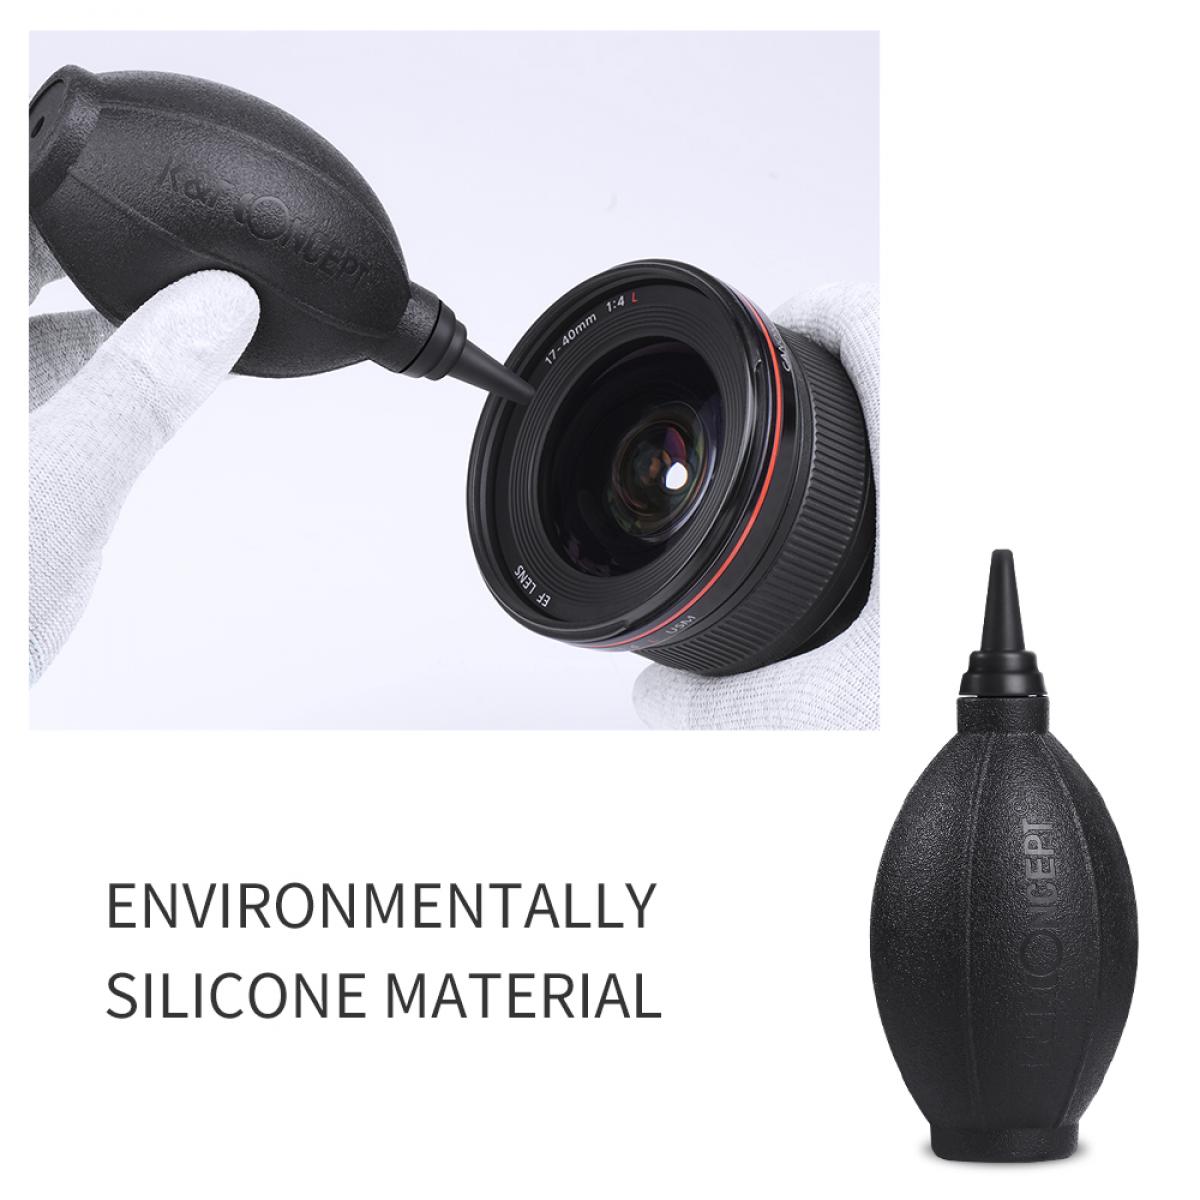 K&F Concept Professional Cleaning Kit for DSLR Cameras and Sensitive Electronics Bundle